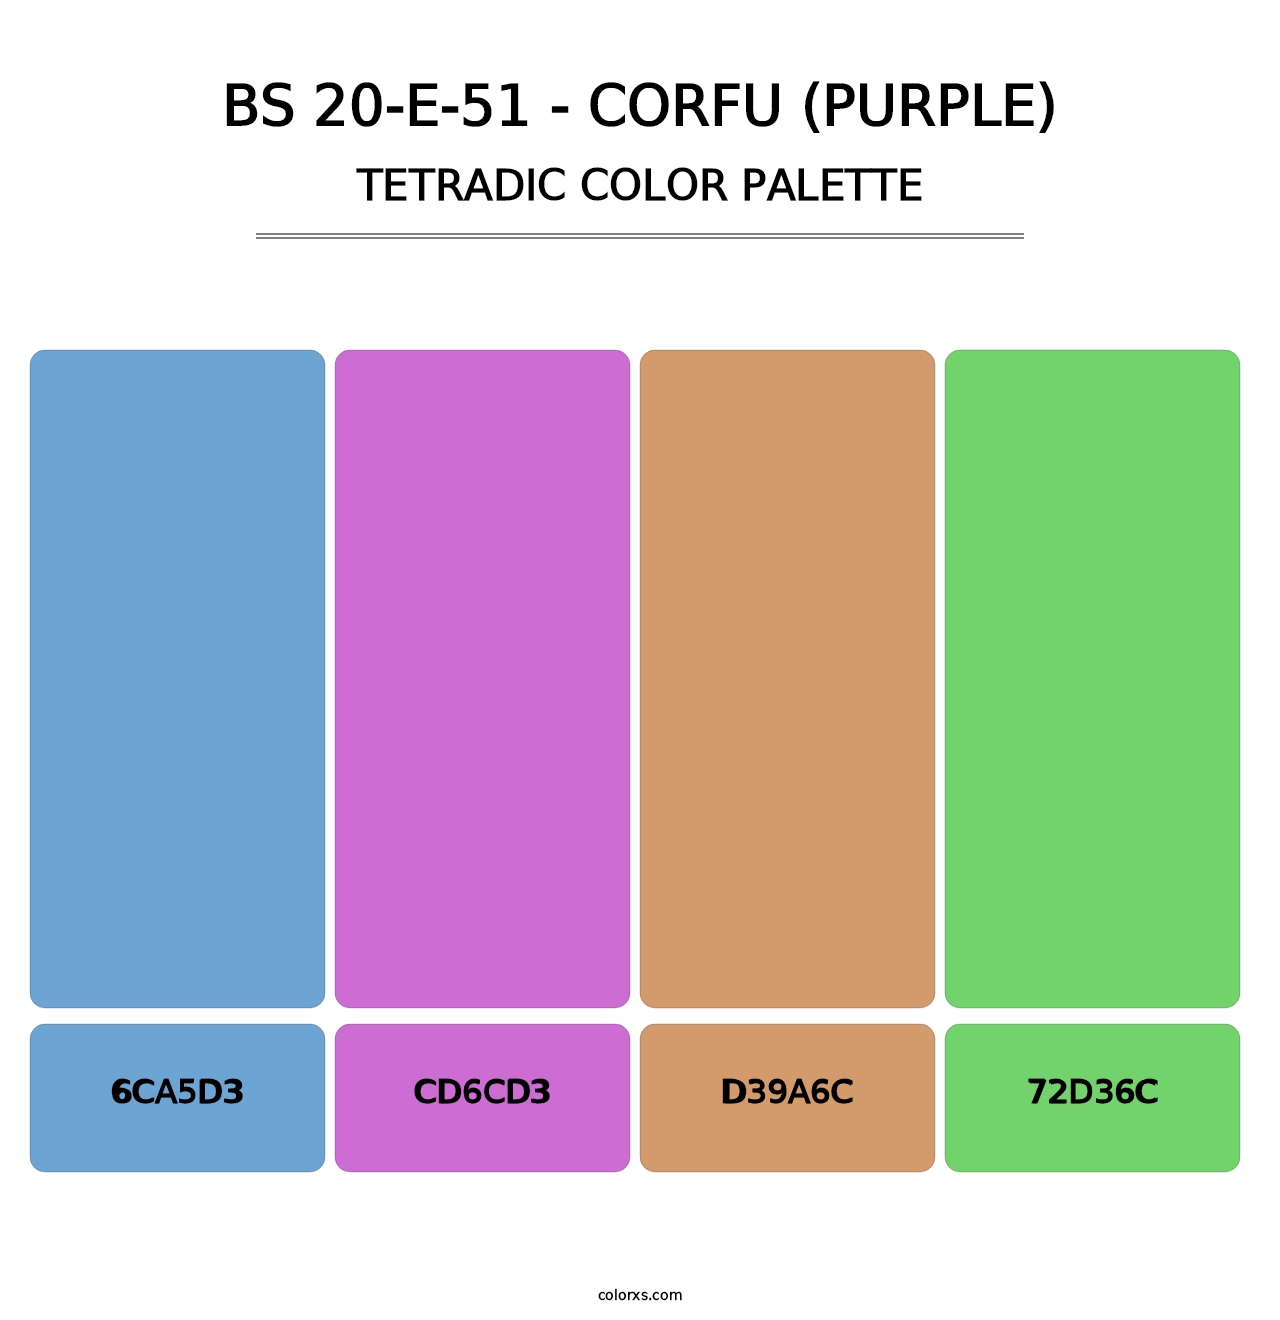 BS 20-E-51 - Corfu (Purple) - Tetradic Color Palette